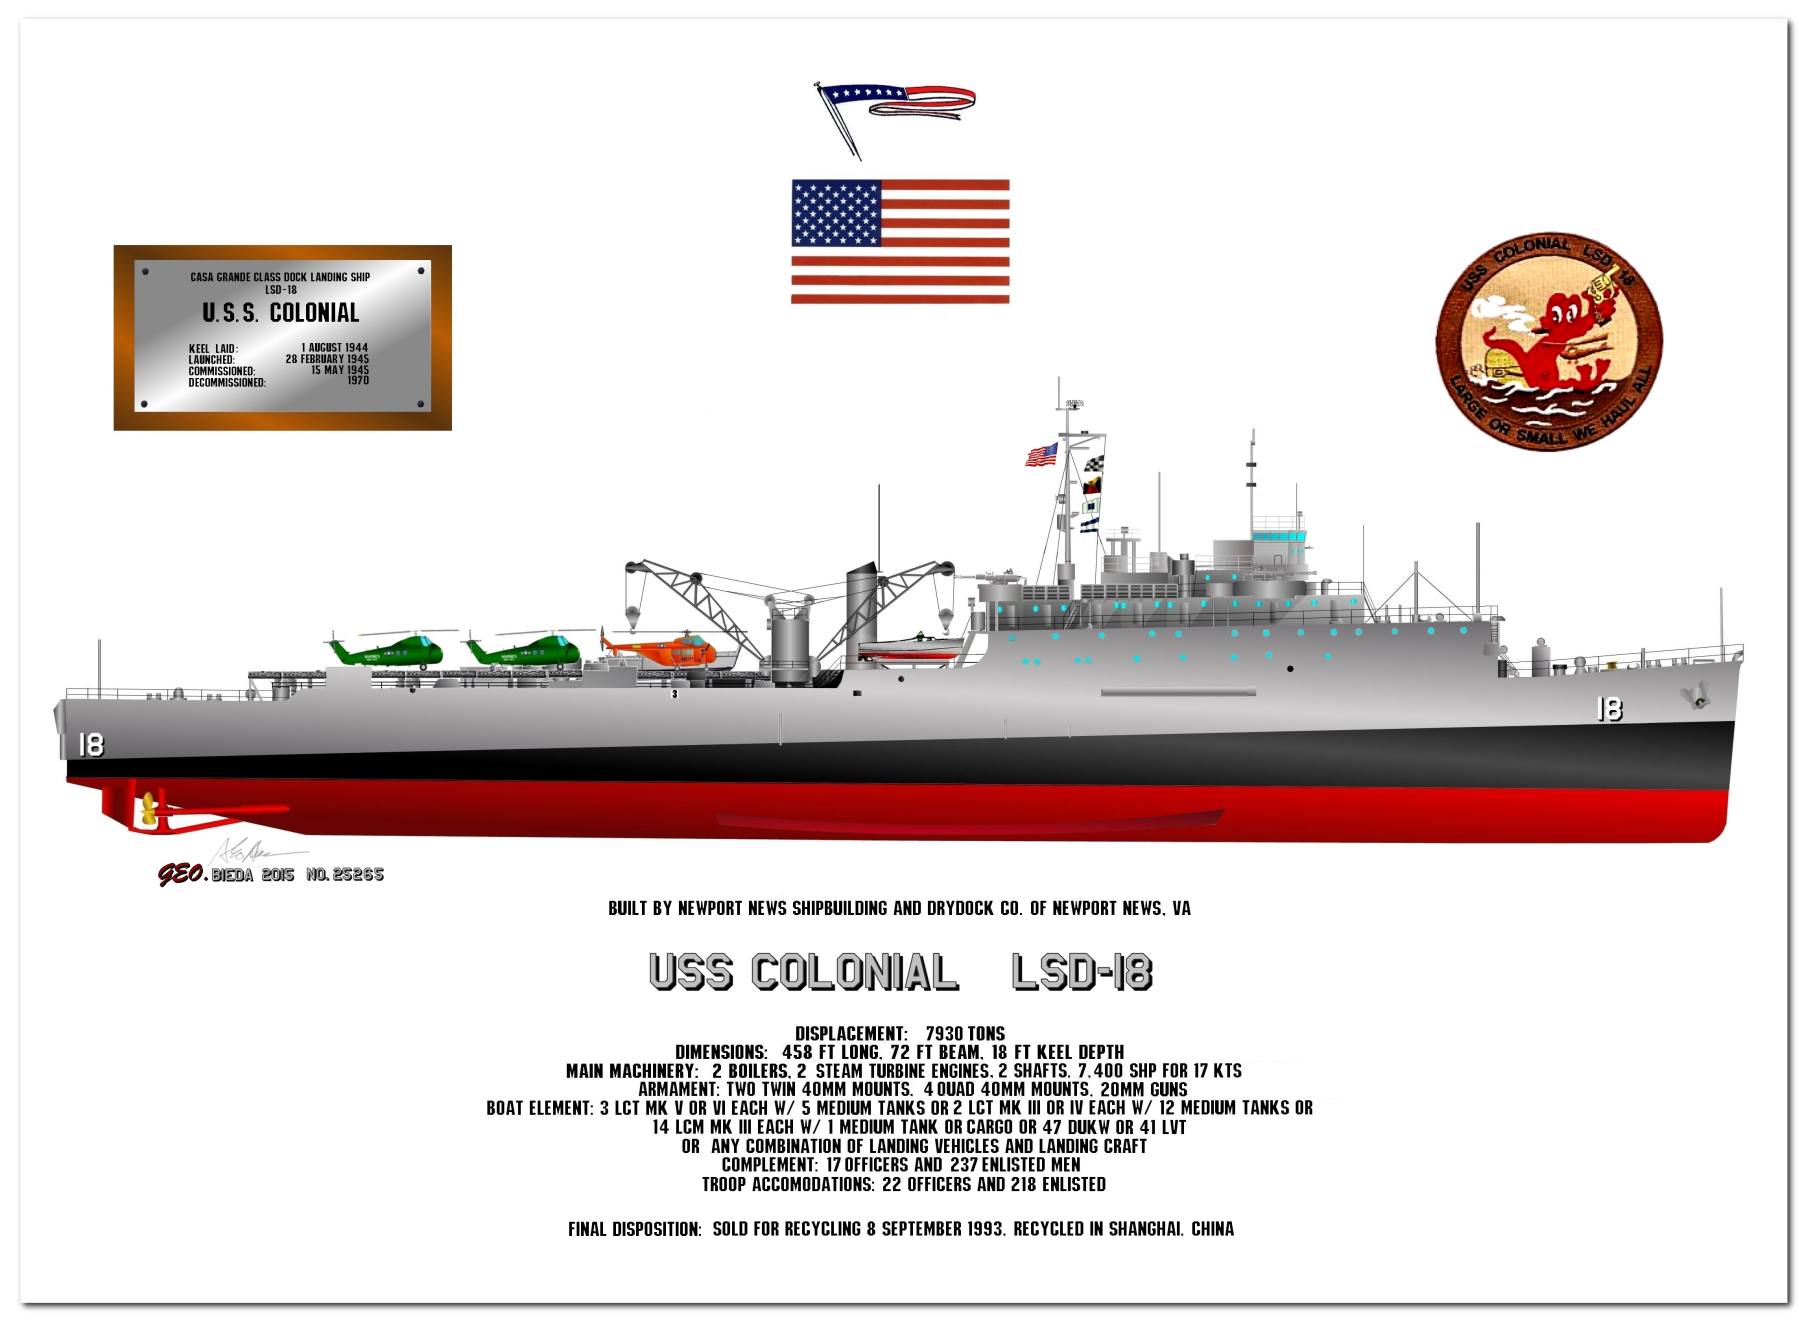 Casa Grande and Cabildo Class Dock Landing Ship (LSD) Profile Drawings by George Bieda